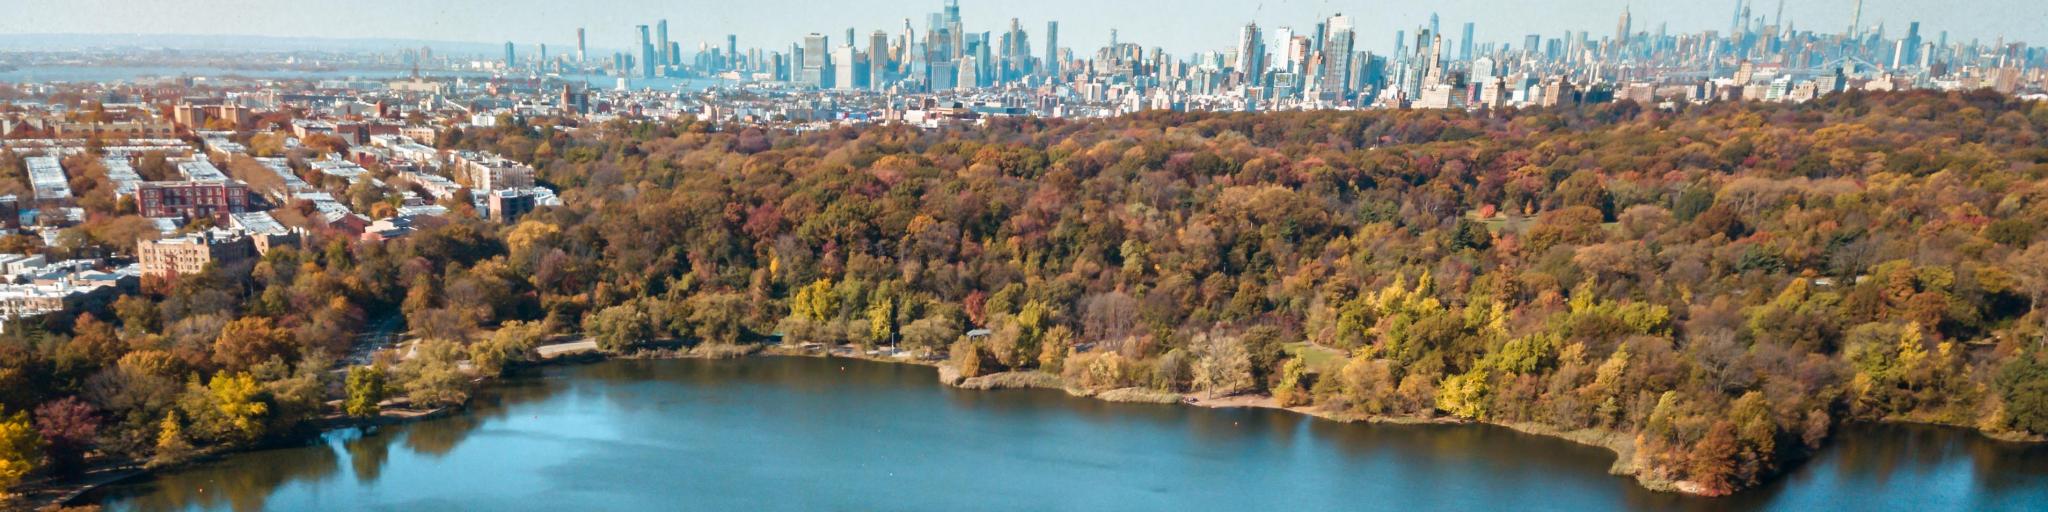 Aerial photo of Prospect Park, Brooklyn